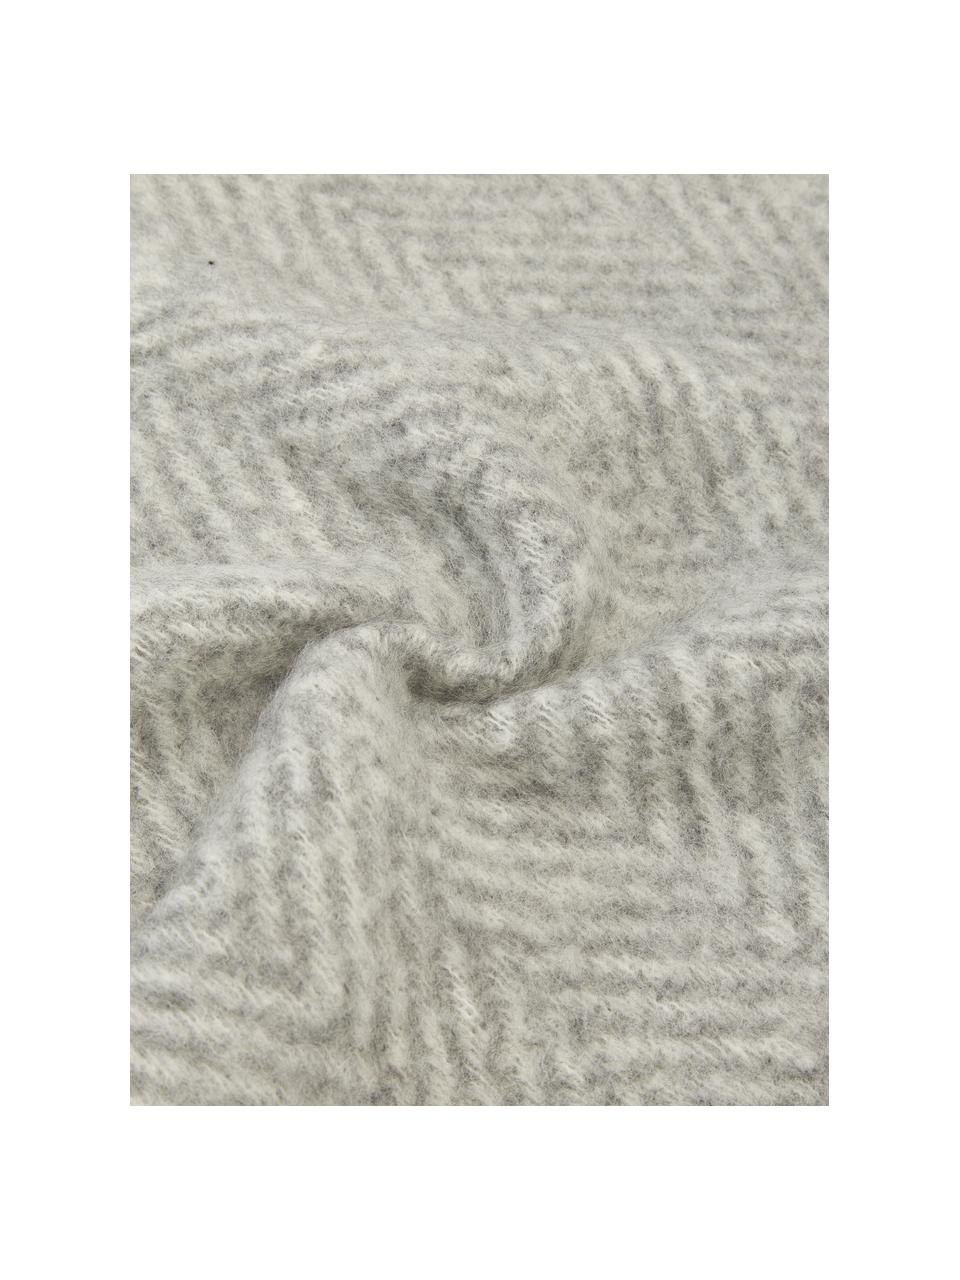 Wollen plaid Mathea met franjes in grijs, 60% wol, 25% acryl, 15% nylon, Grijs, L 170 x B 130 cm